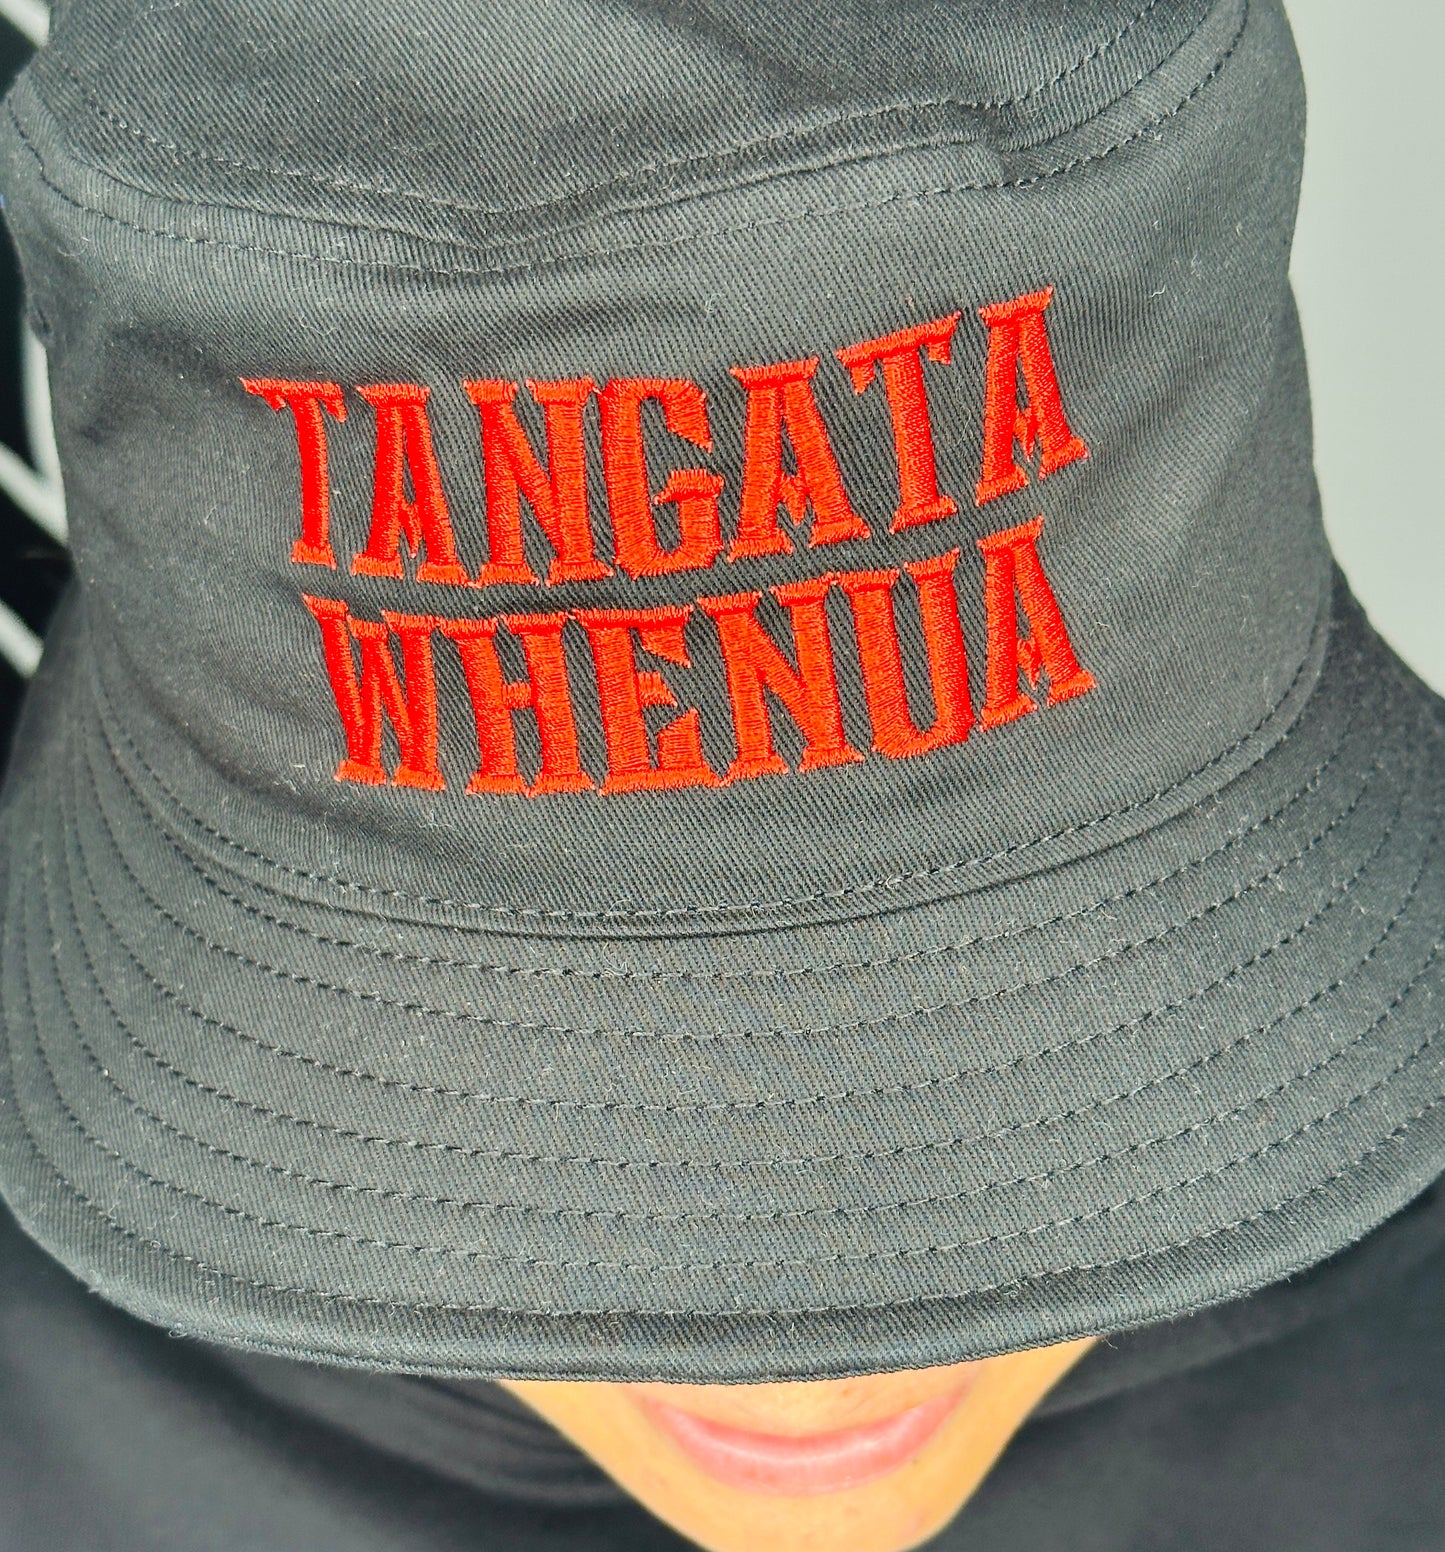 TANGATA WHENUA BUCKET HATS